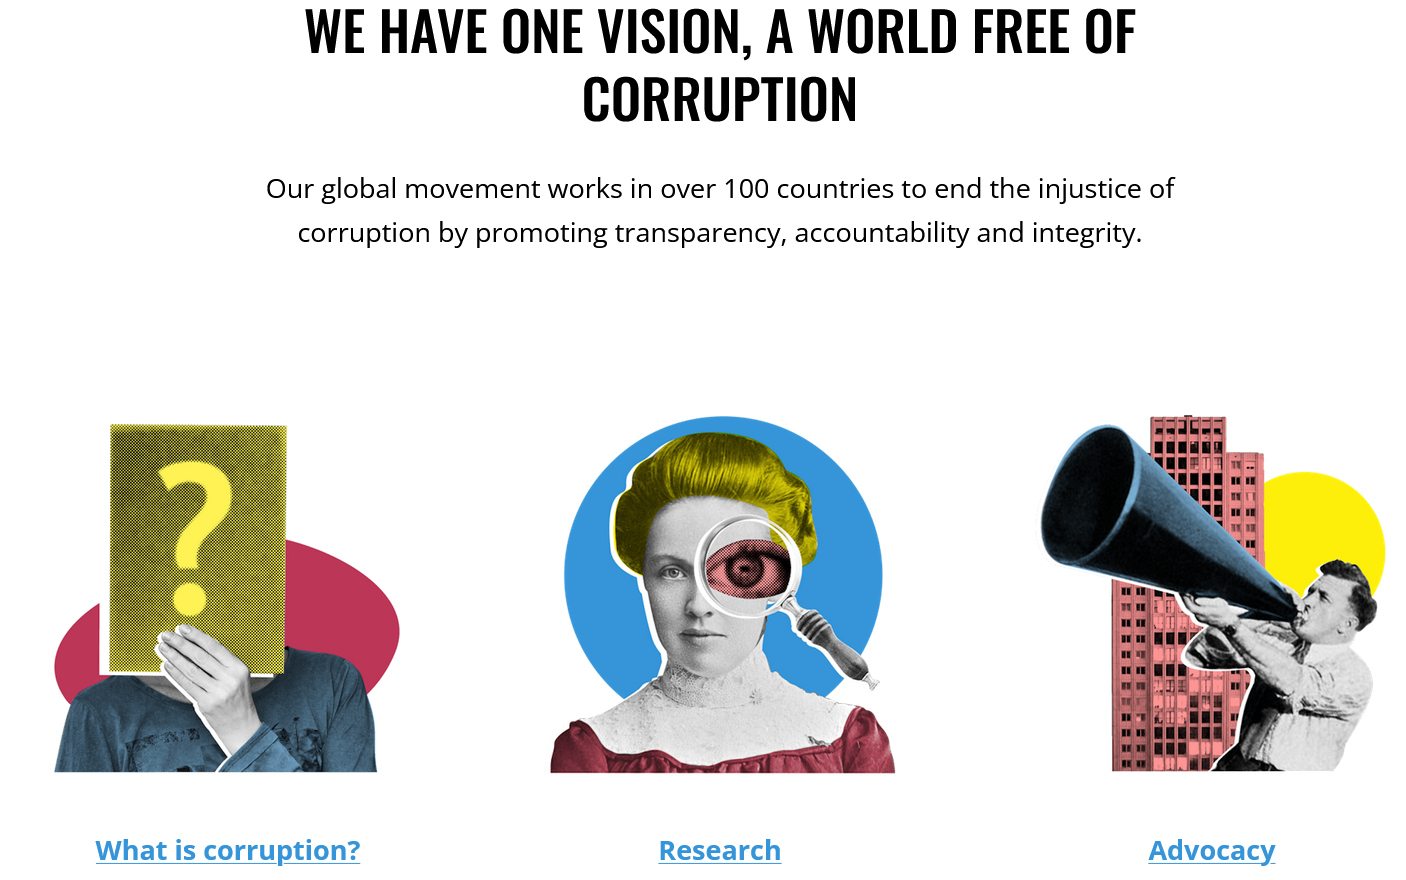 Transparency International’s branding belies its nefarious goals